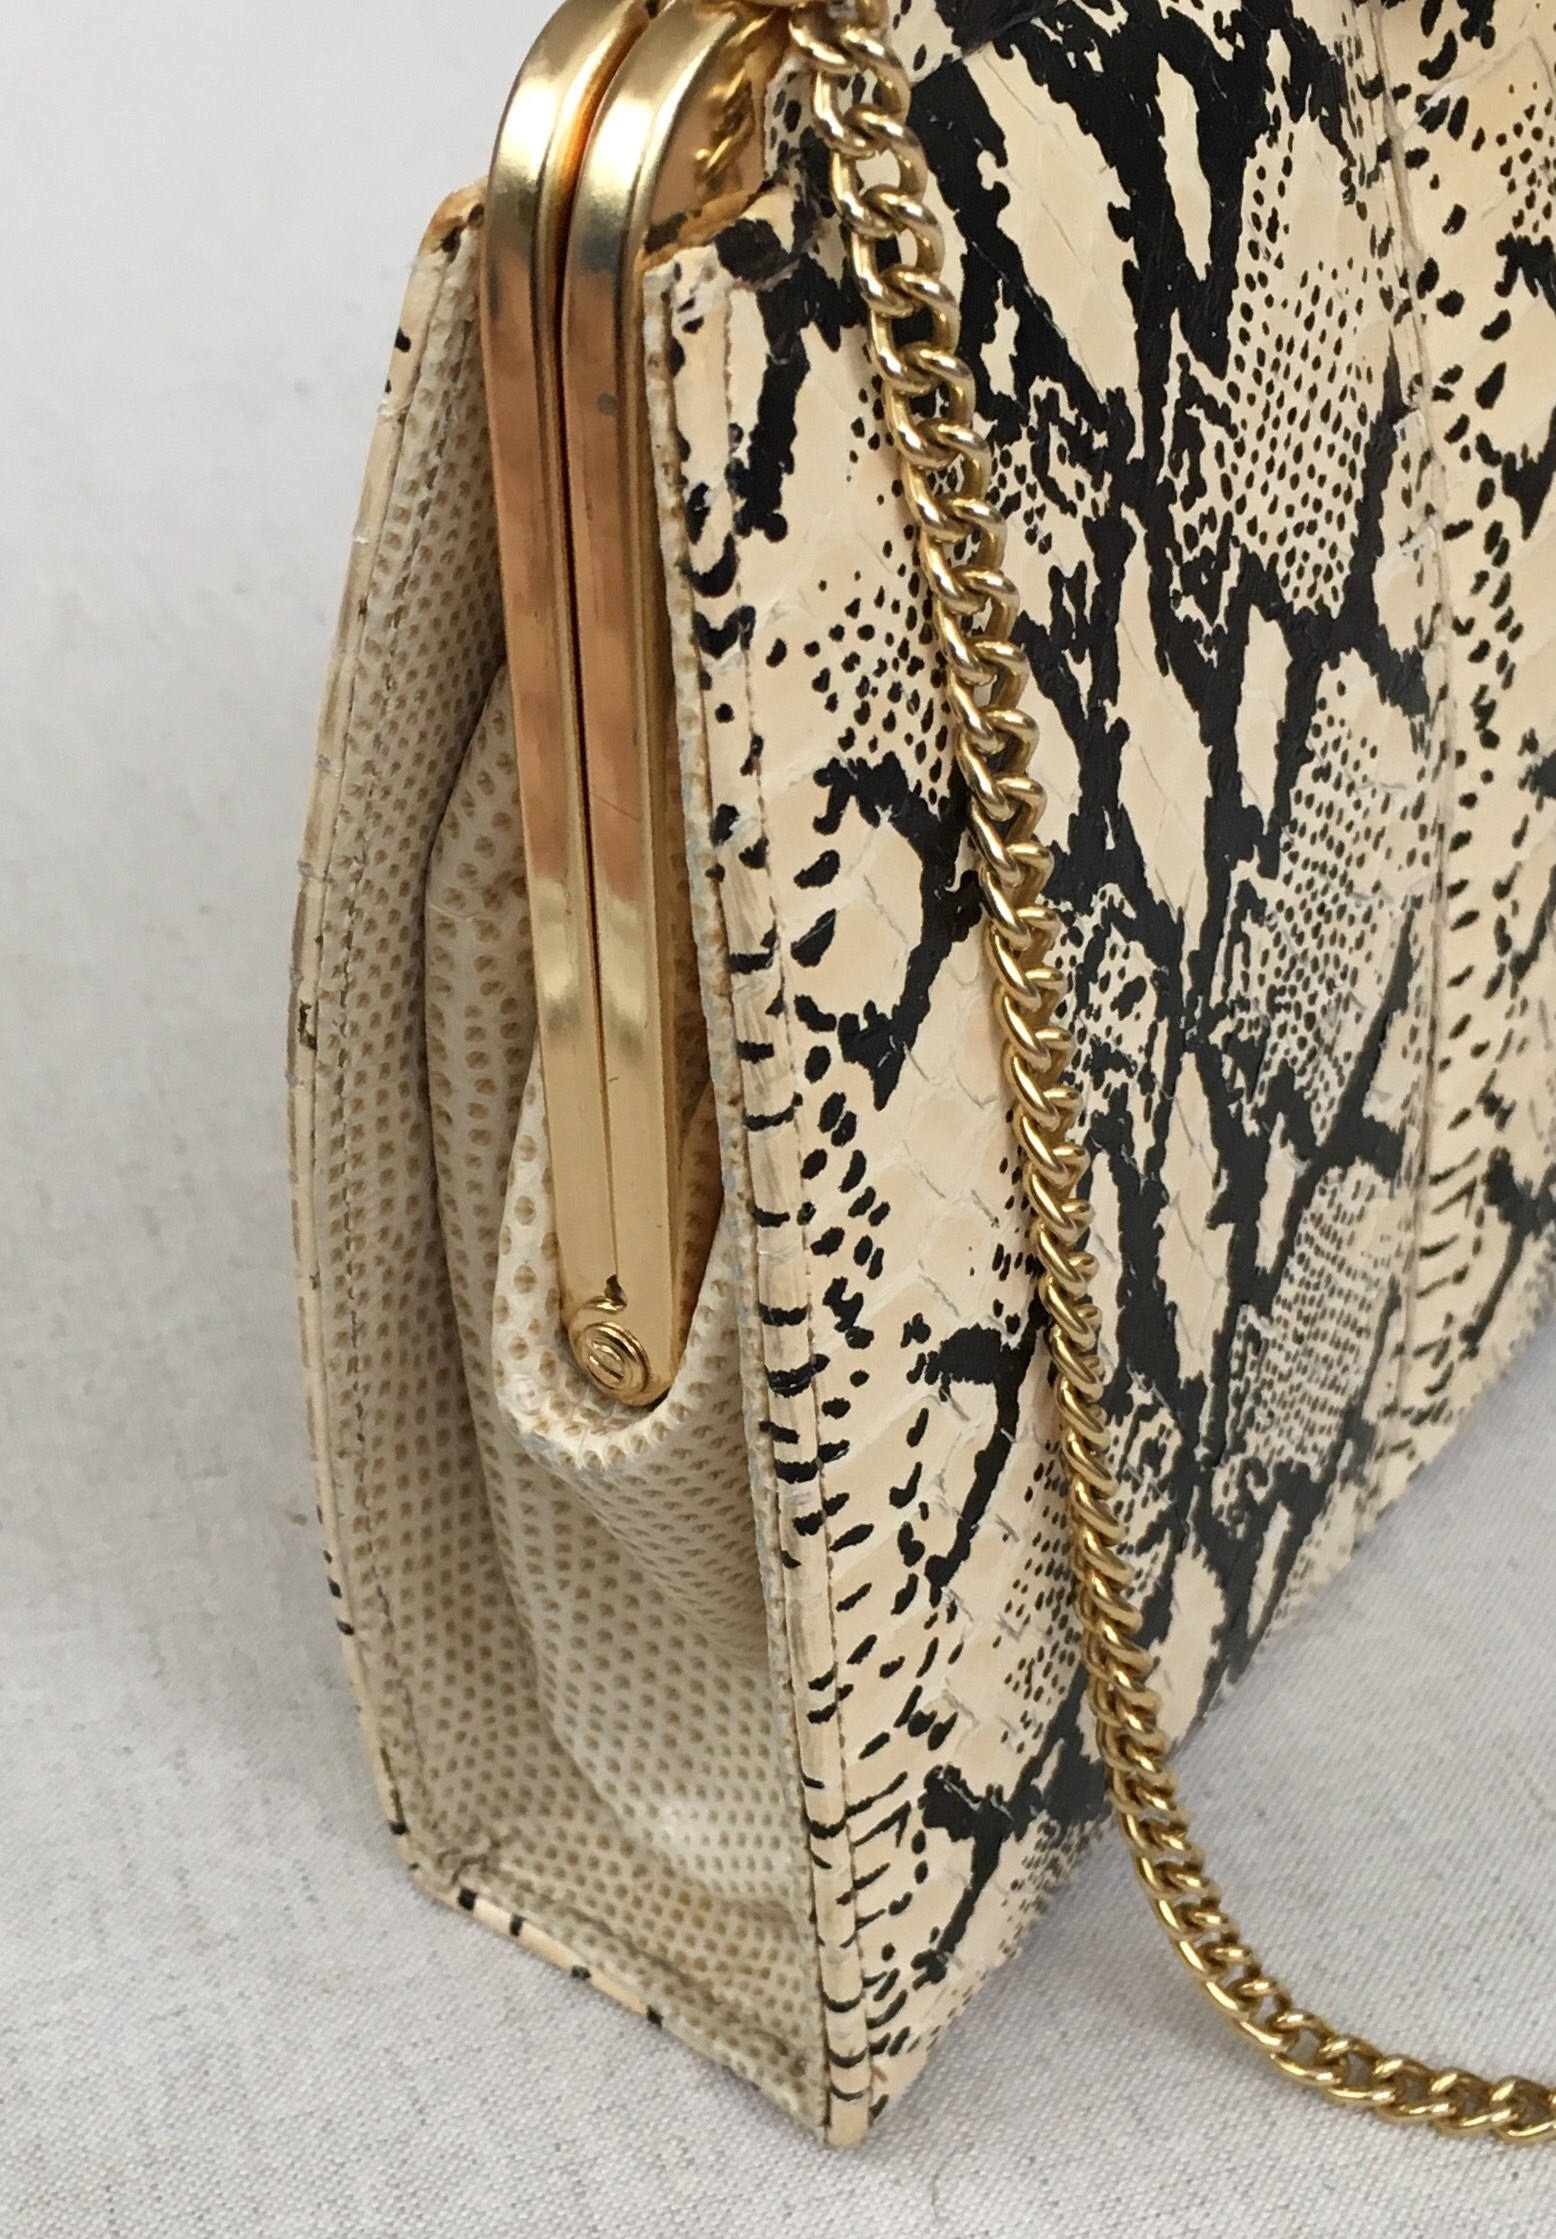 Snakeskin Purse Black White Handbag Made in England Vintage Genuine Snake Skin Leather Lining ...